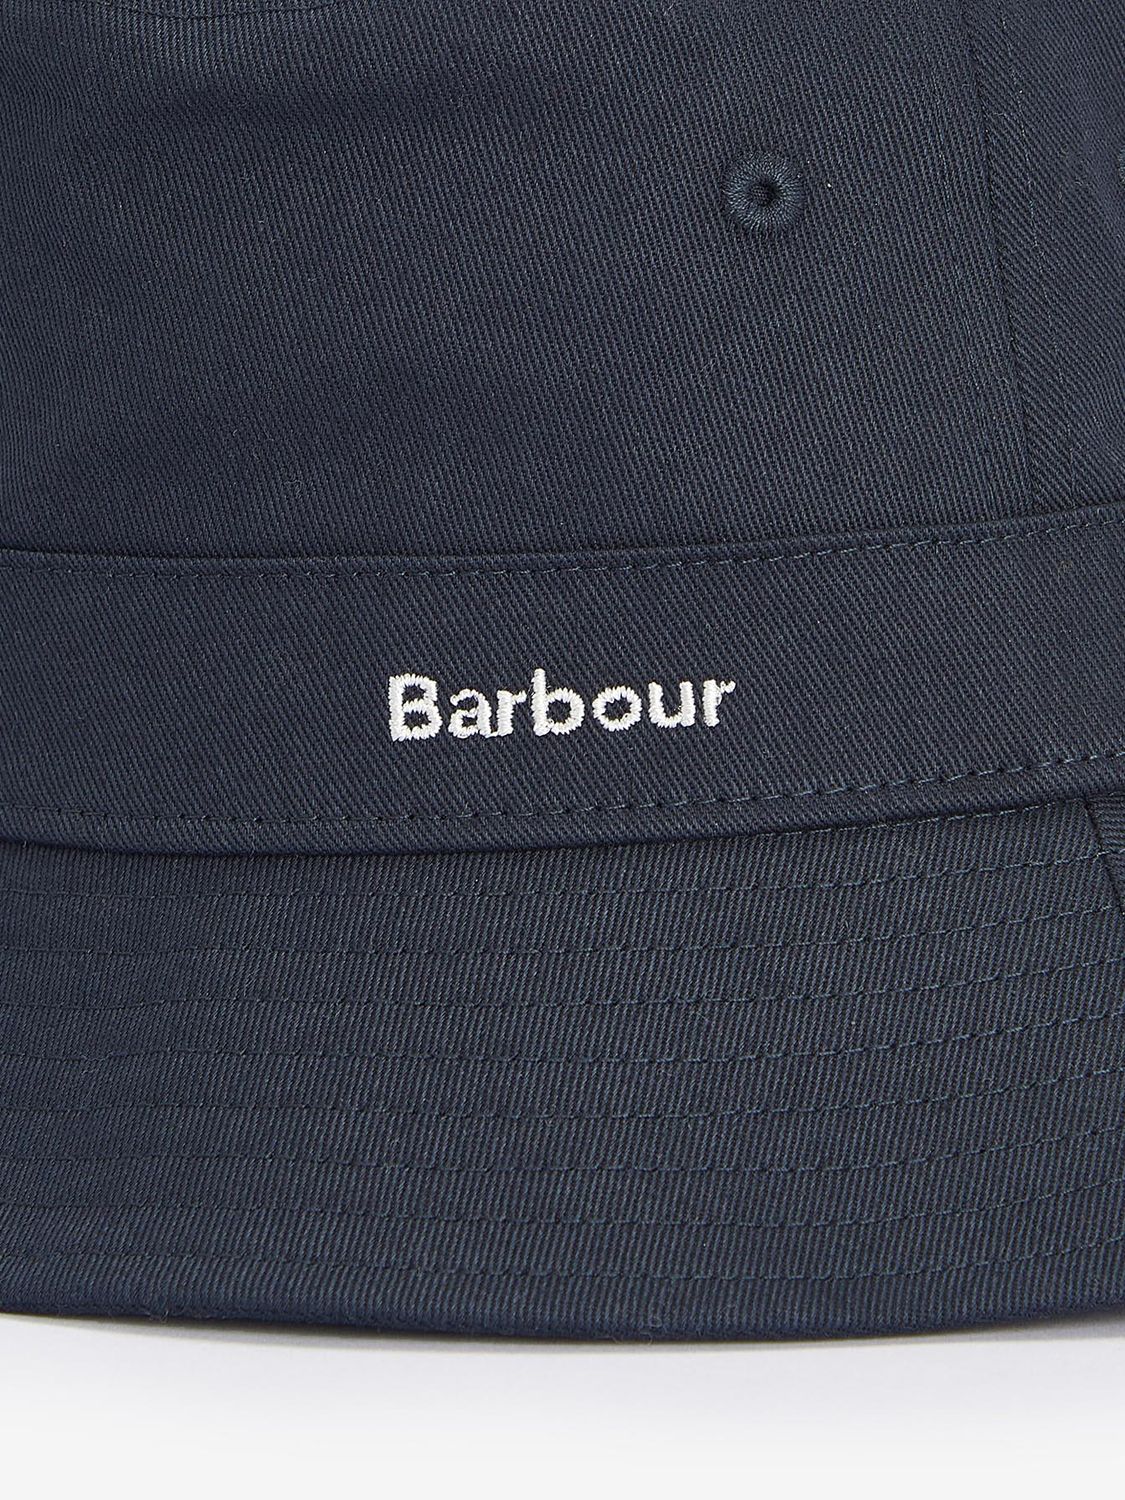 Buy Barbour Olivia Cotton Bucket Hat Online at johnlewis.com